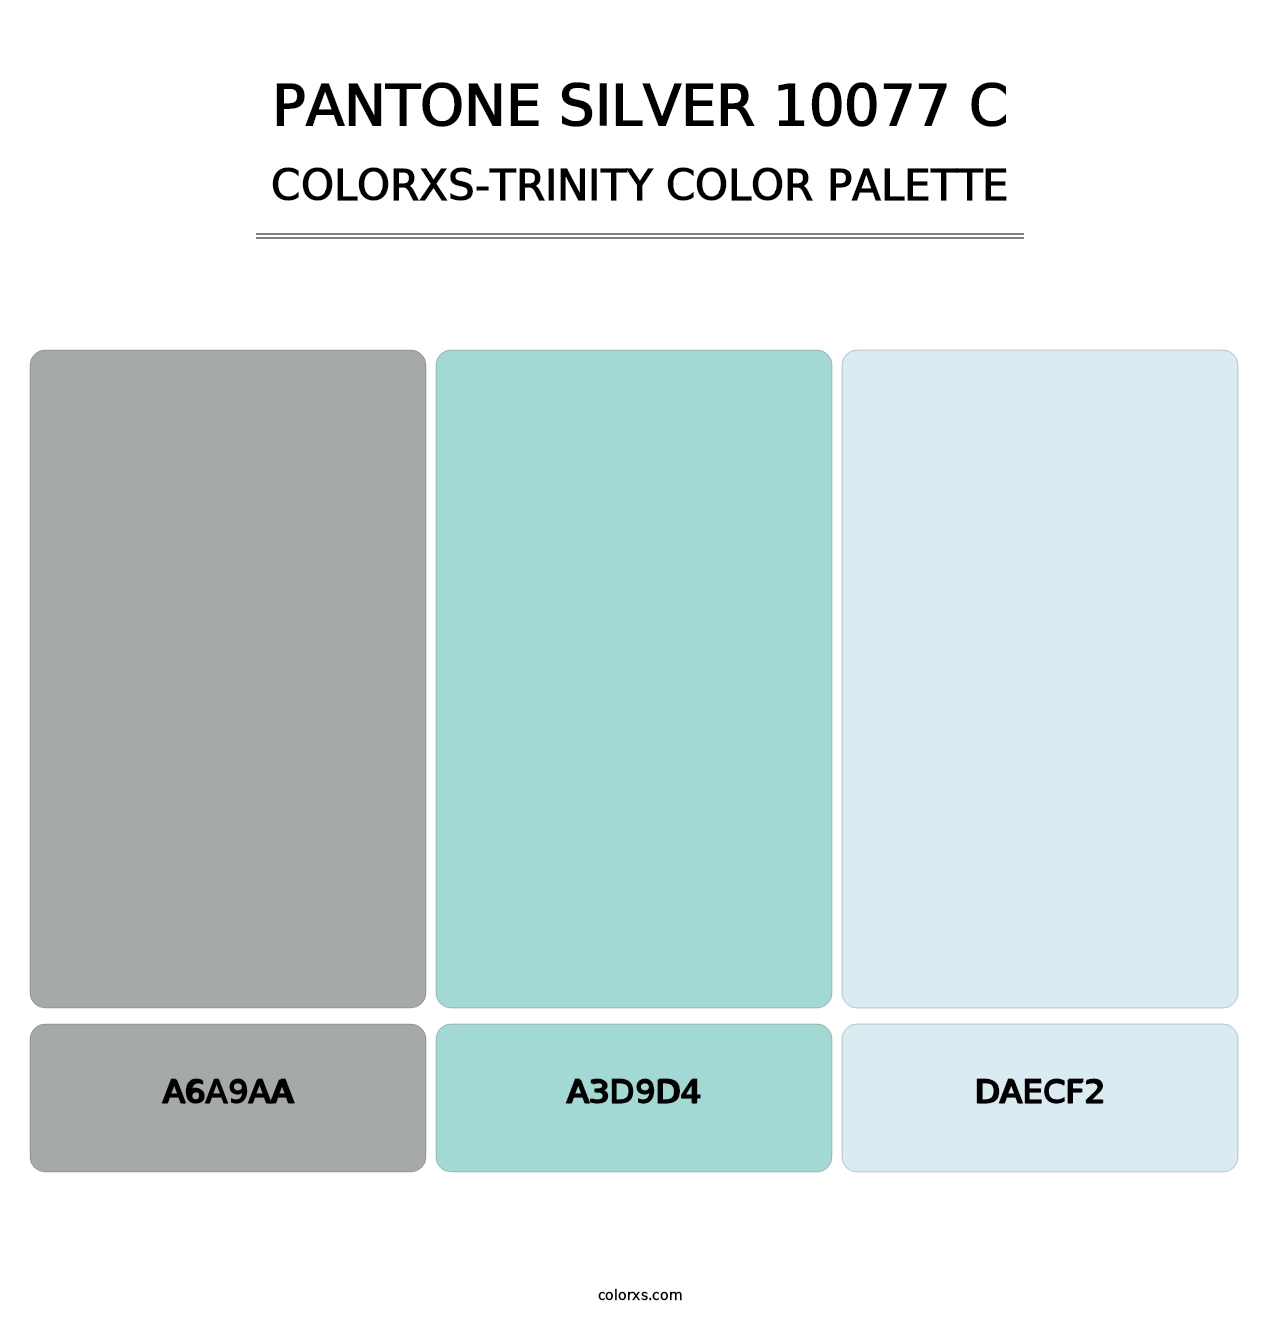 PANTONE Silver 10077 C - Colorxs Trinity Palette